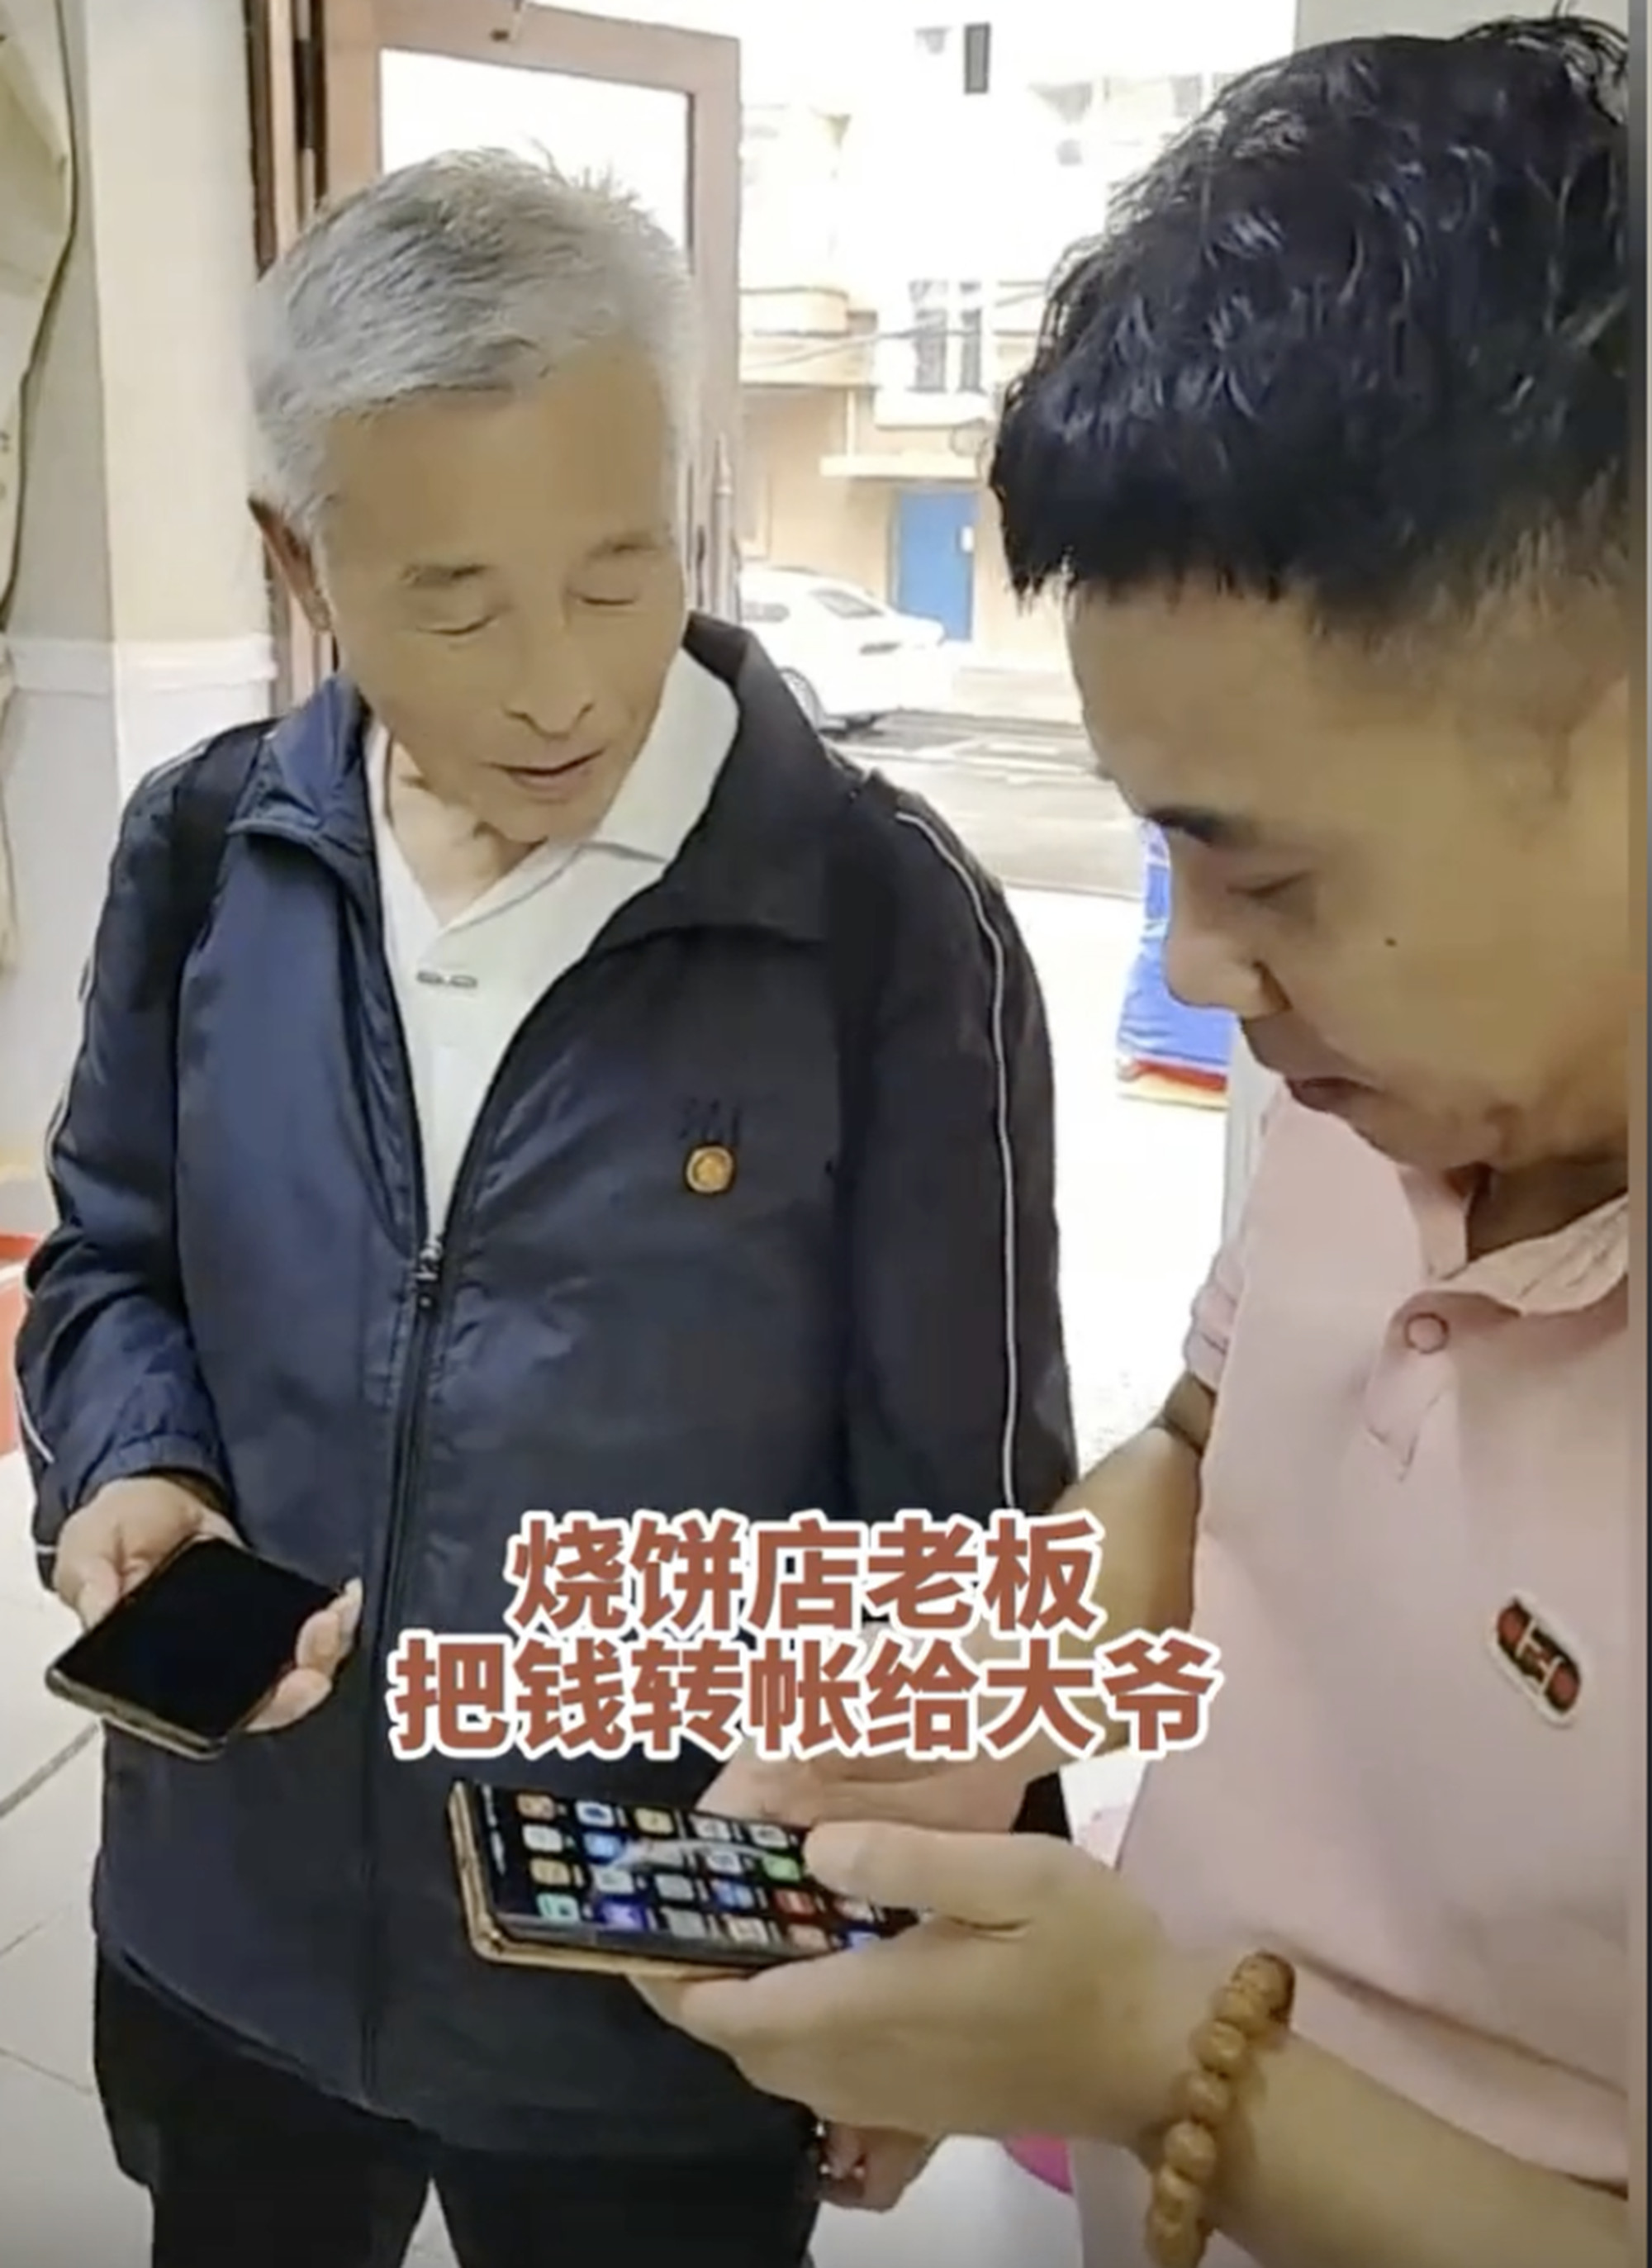 Bakery boss Zhang Dayong, right, returns the elderly man his money via a digital payment app. Photo: Douyin